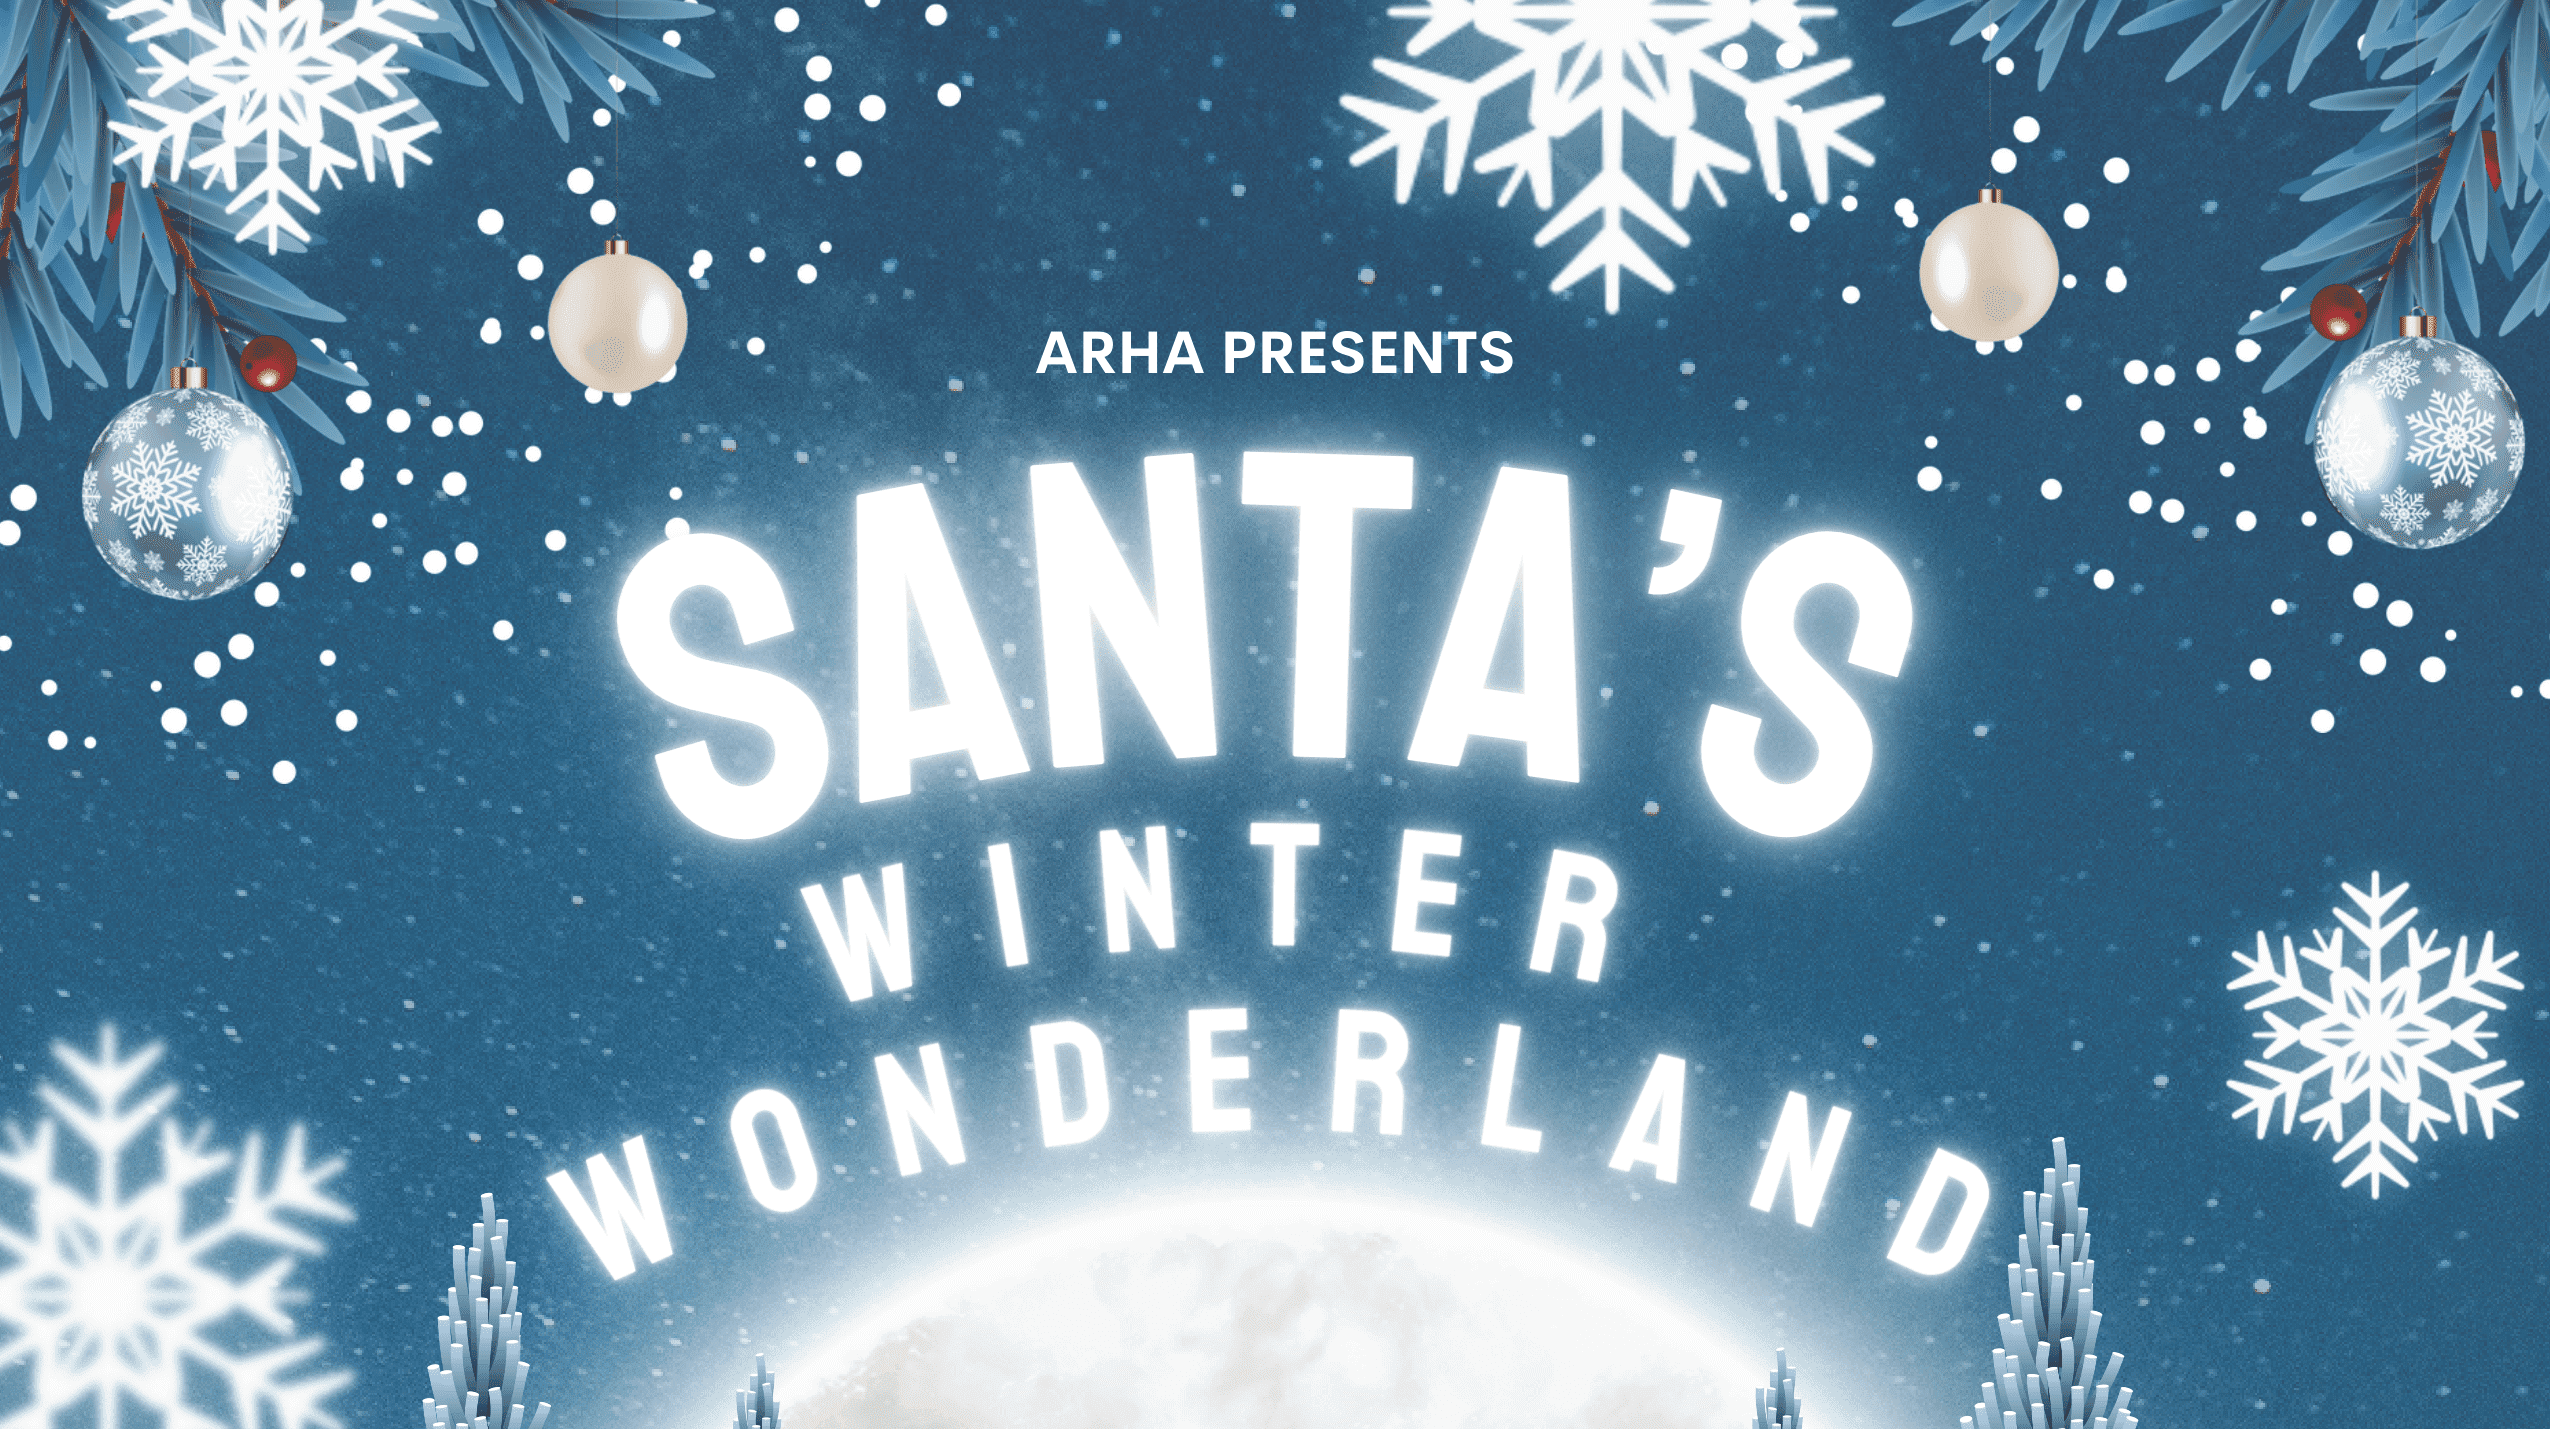 white text on a blue snowy background that says ARHA PRESENTS SANTA'S WINTER WONDERLAND